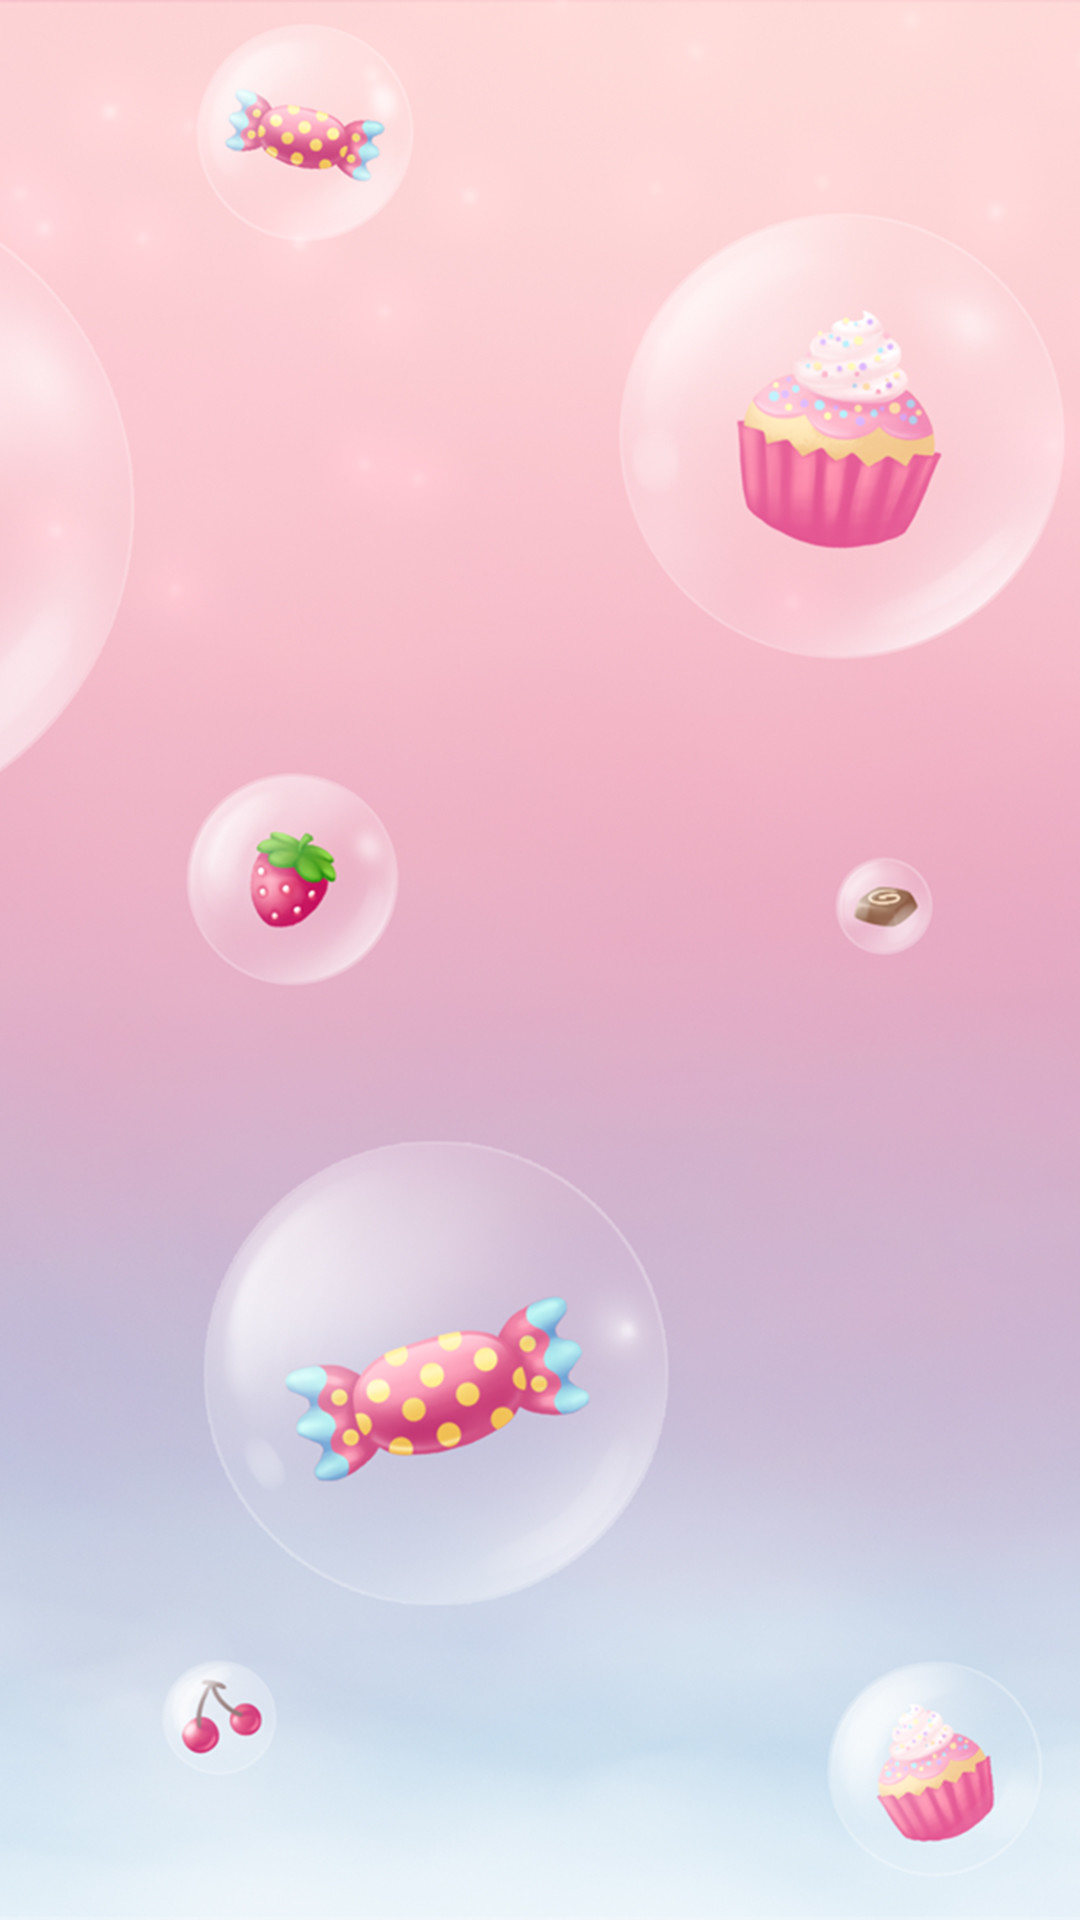 1080x1920 Girly cute iPhone6s wallpaper : cupcakes